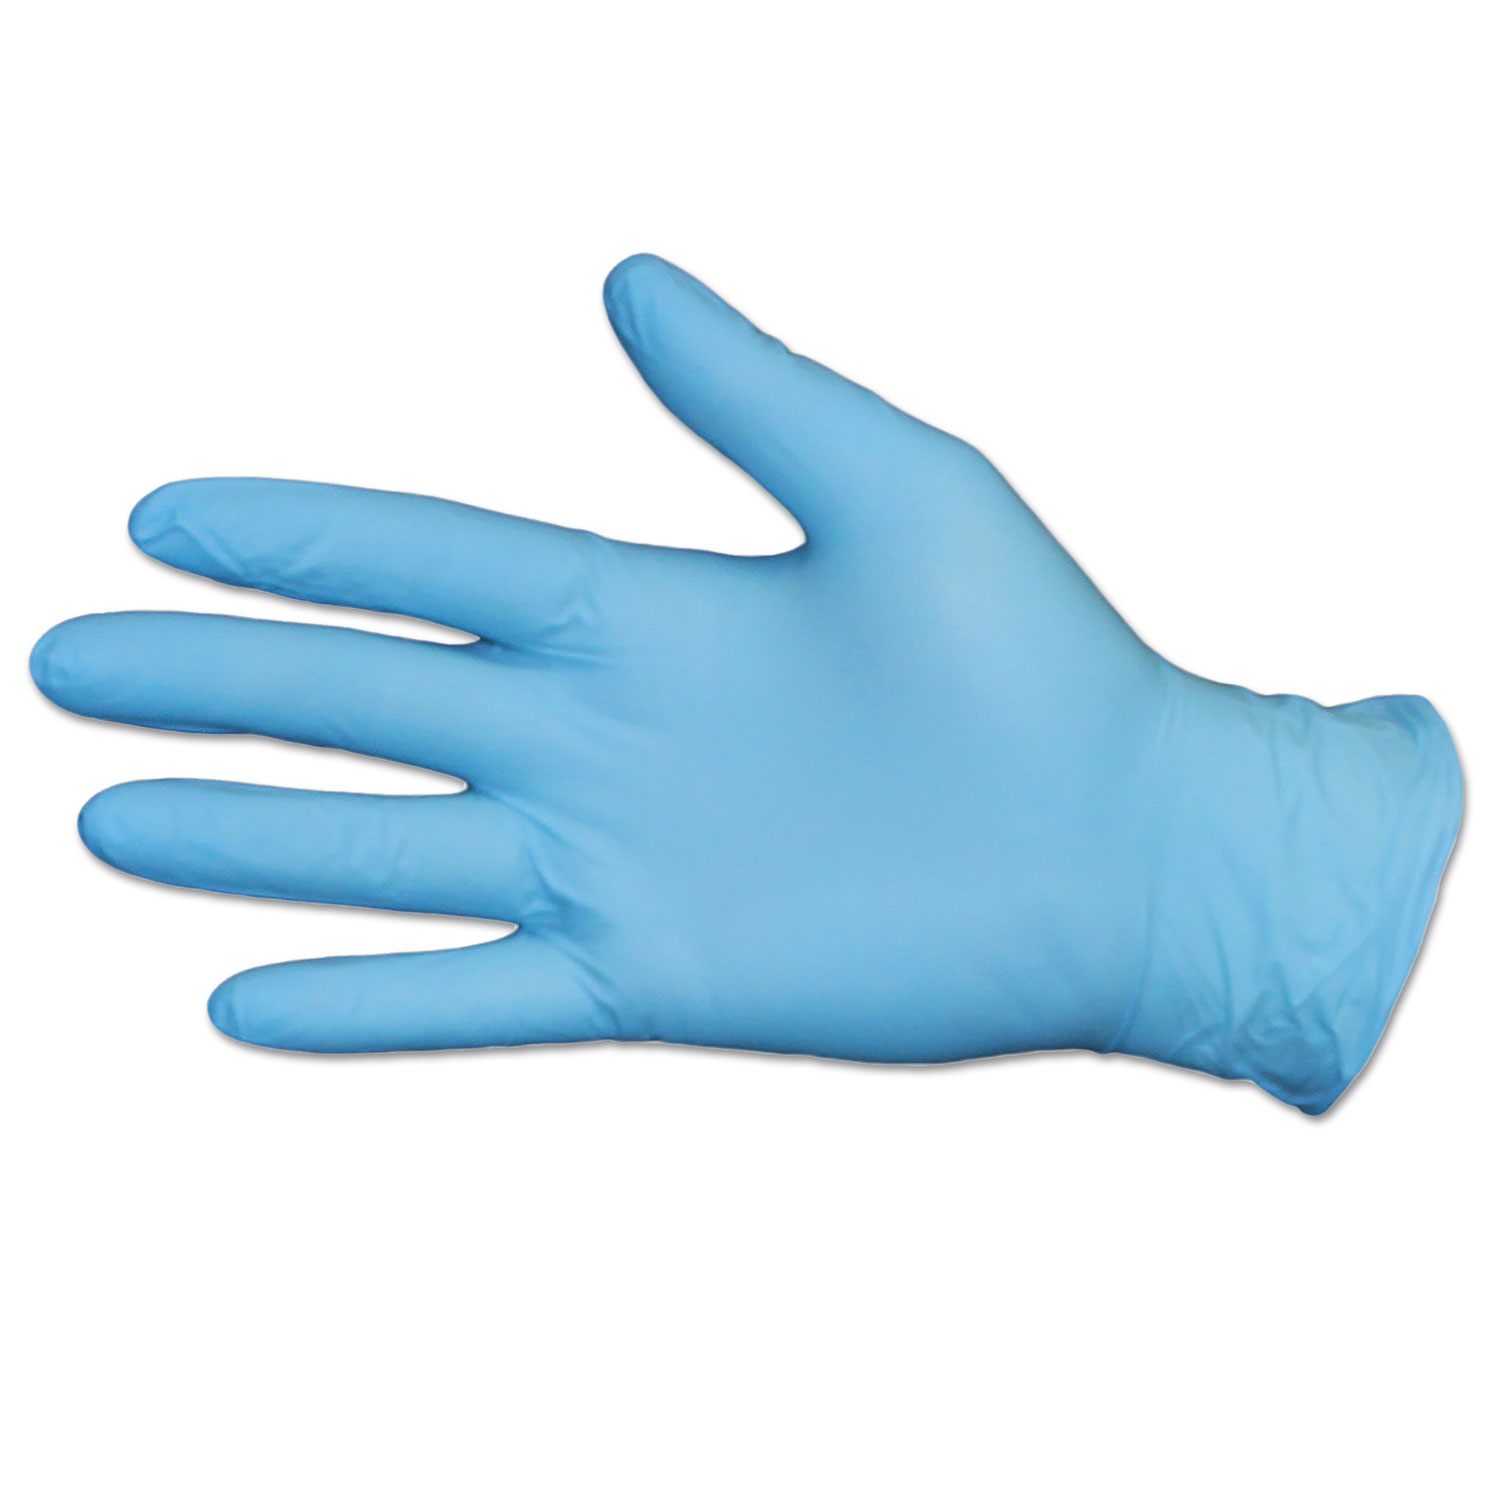  Impact IMP 8644M Pro-Guard Disposable Powder-Free General-Purpose Nitrile Gloves, Blue, Medium, 100/Box, 10 Boxes/Carton (IMP8644M) 